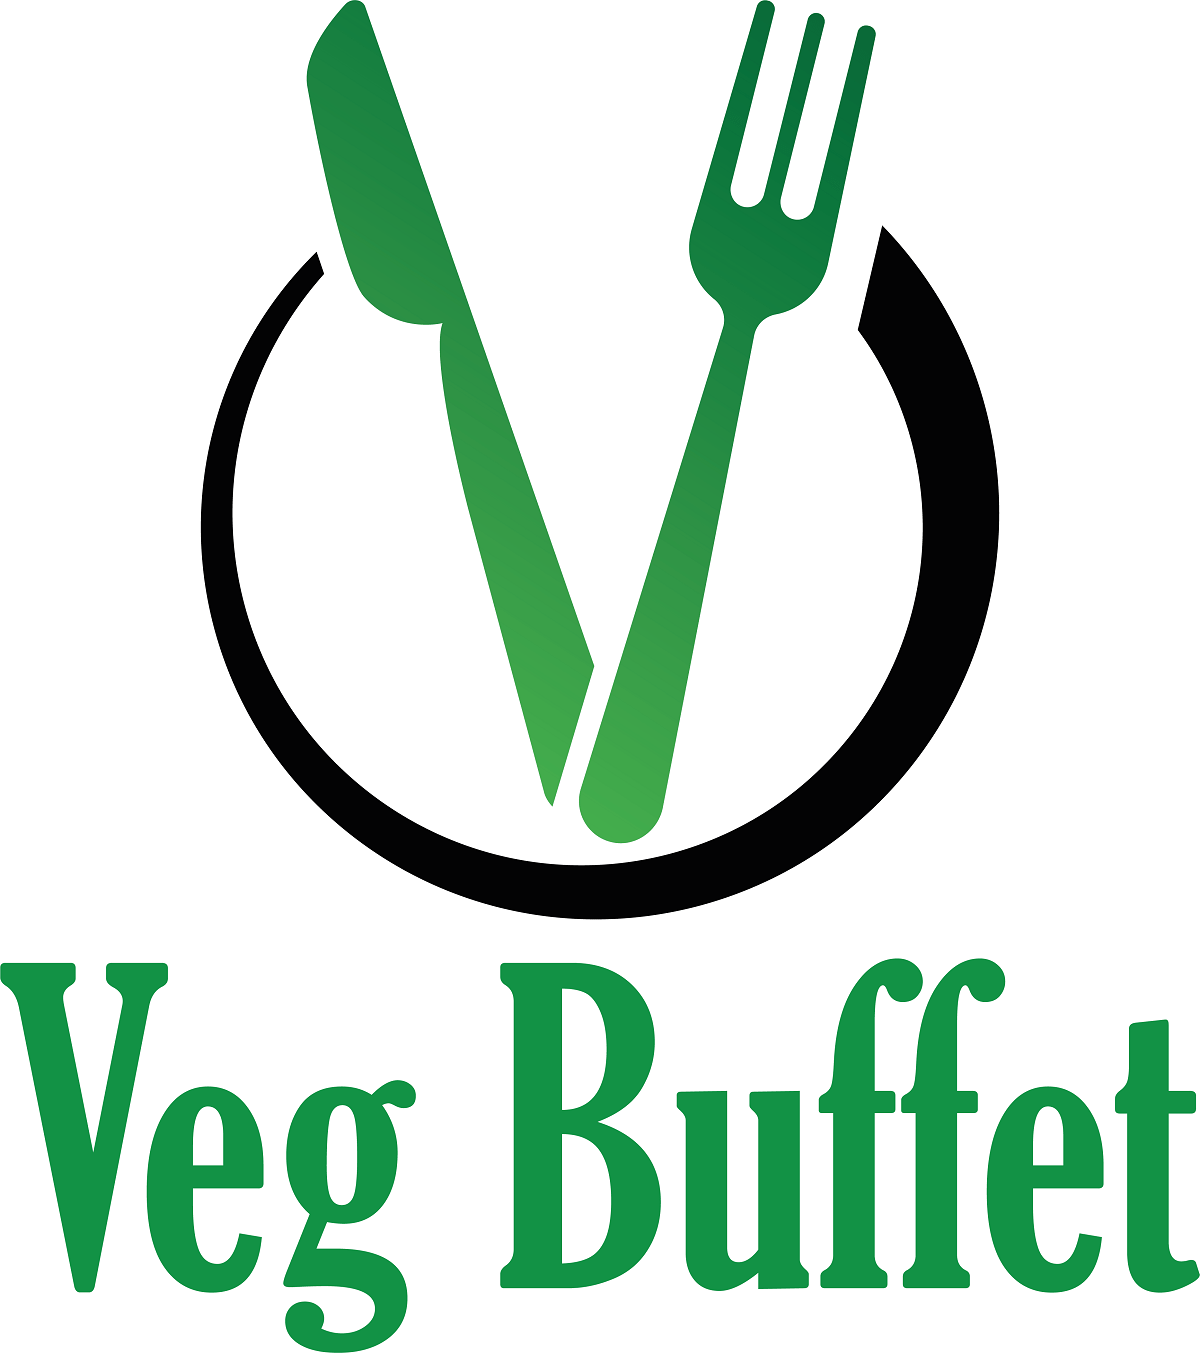 Vegetarian logo green food symbol label Royalty Free Vector